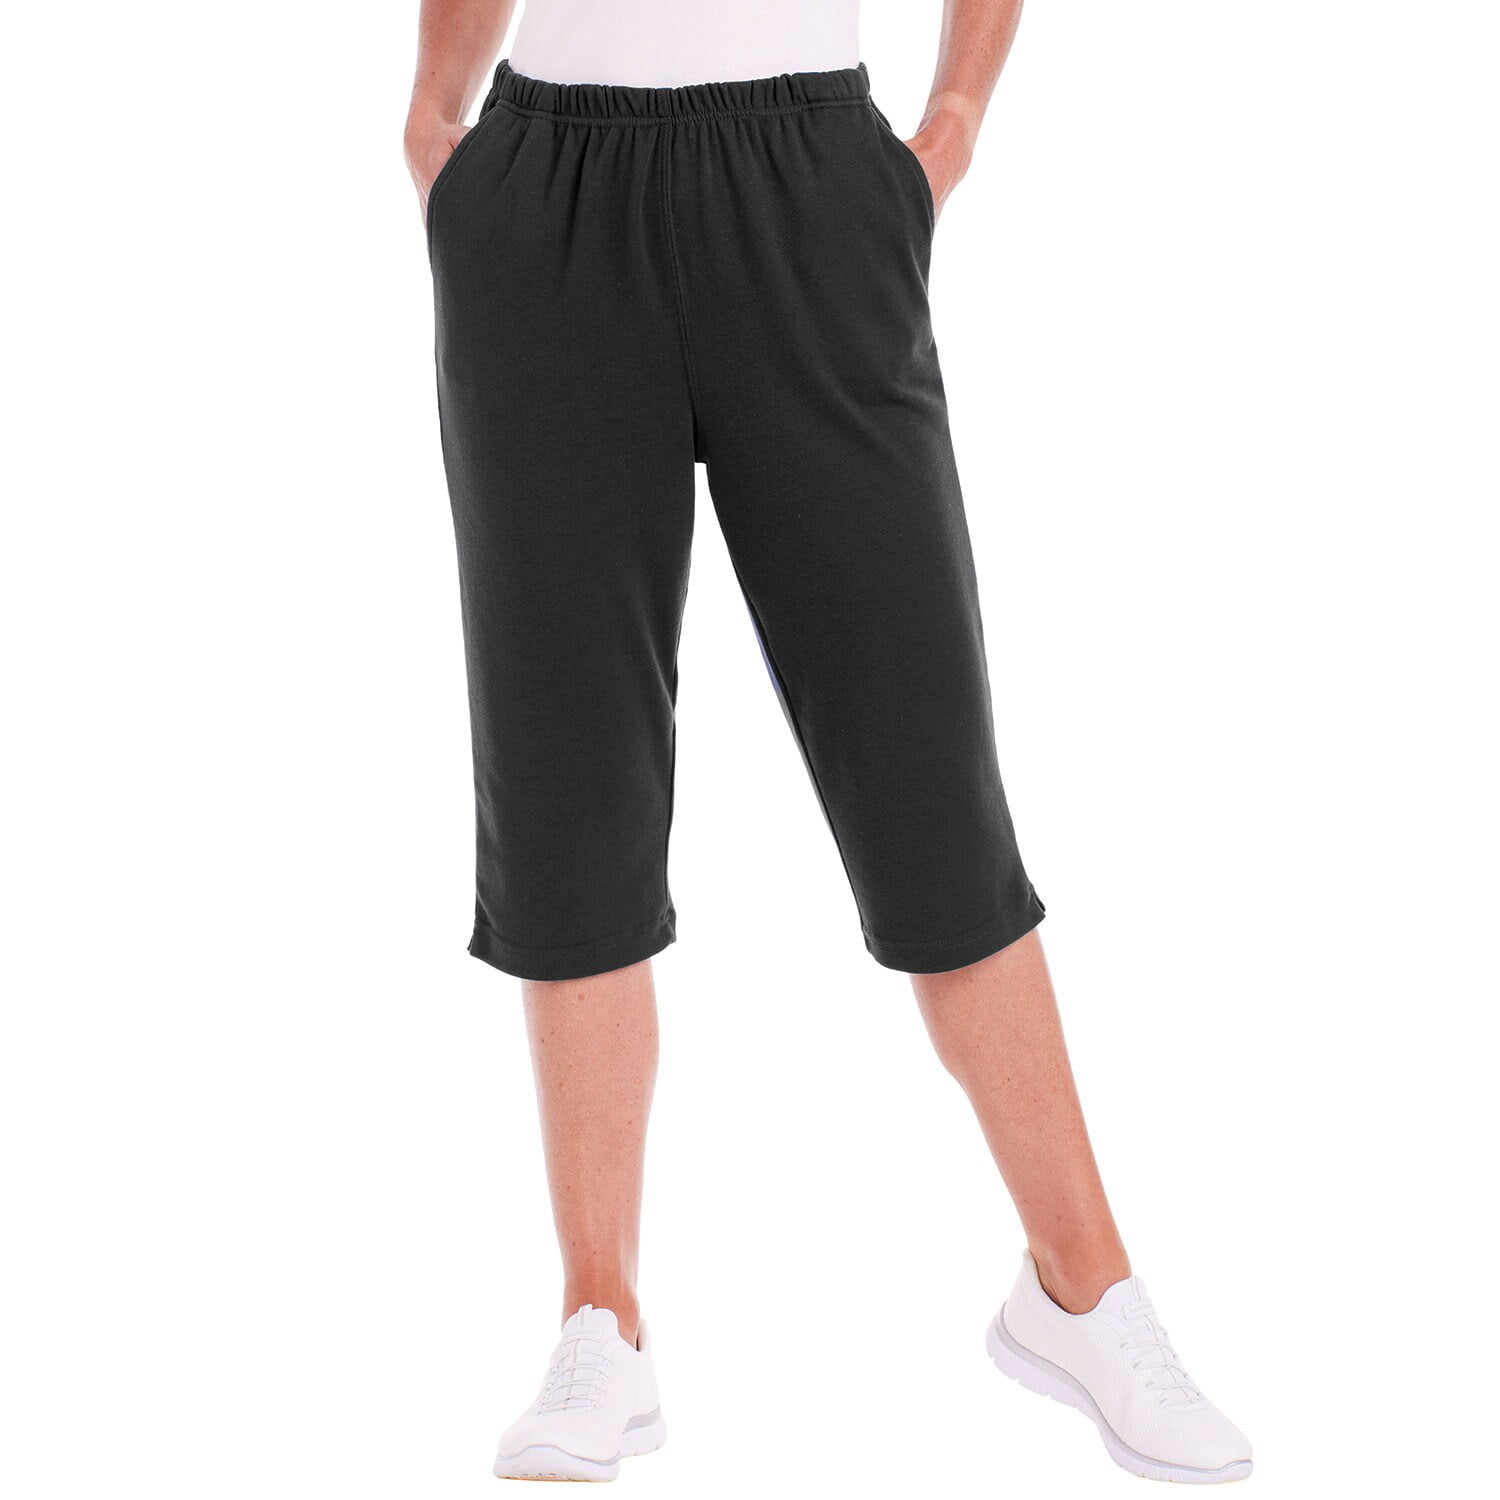 CATALOG CLASSICS Womens Capri Pants with pockets Elastic Waist